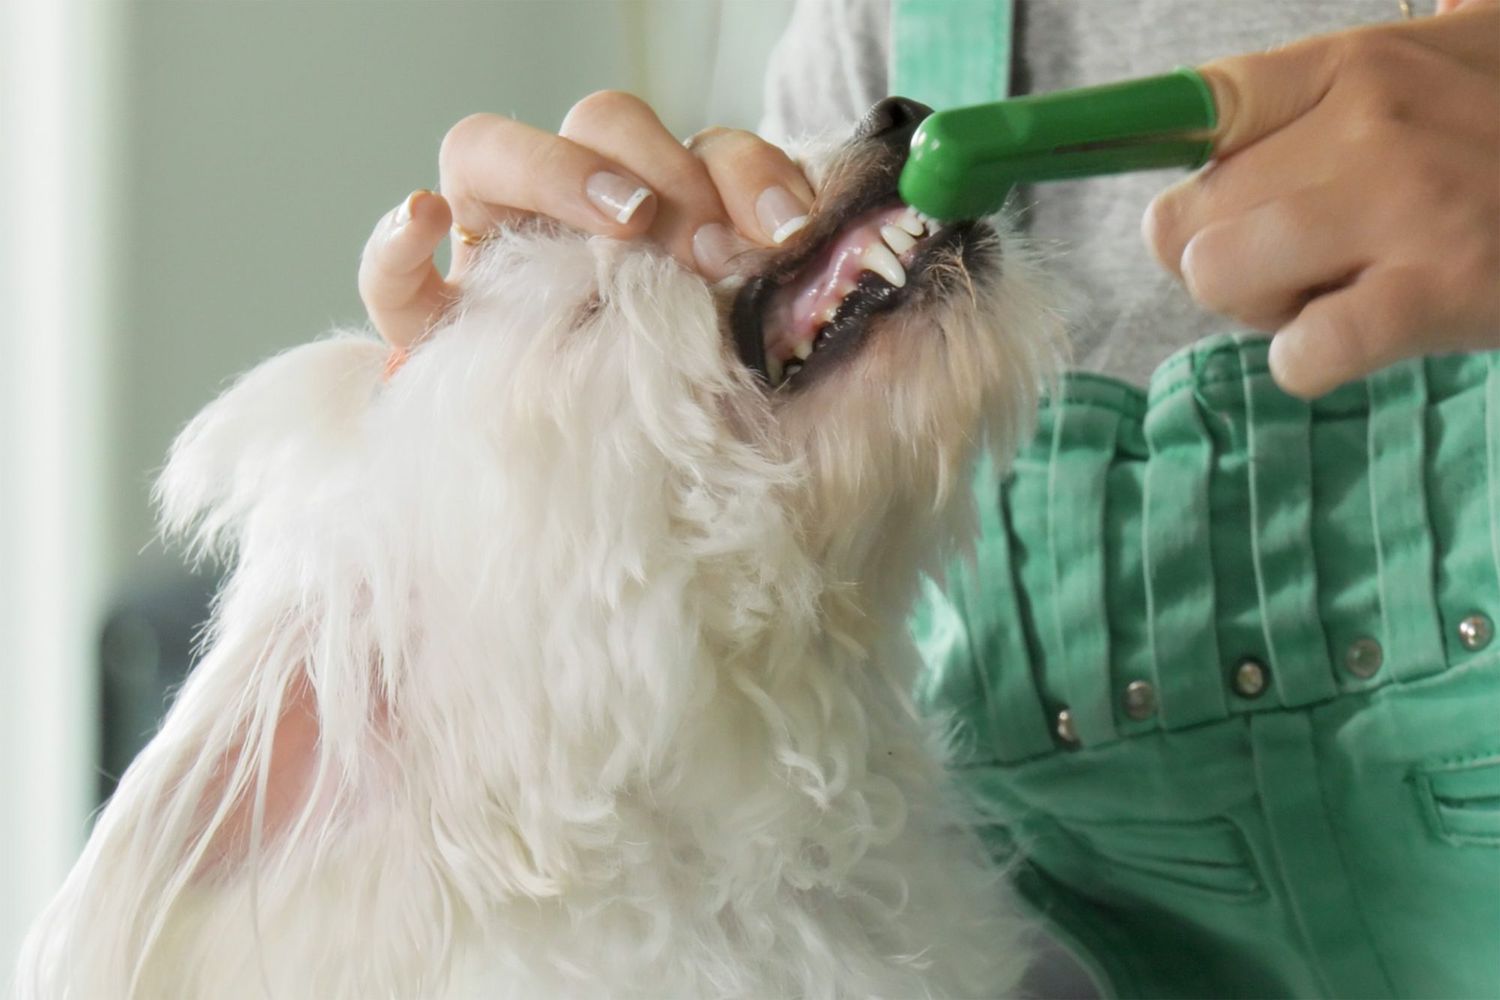 brushing dog's teeth at home